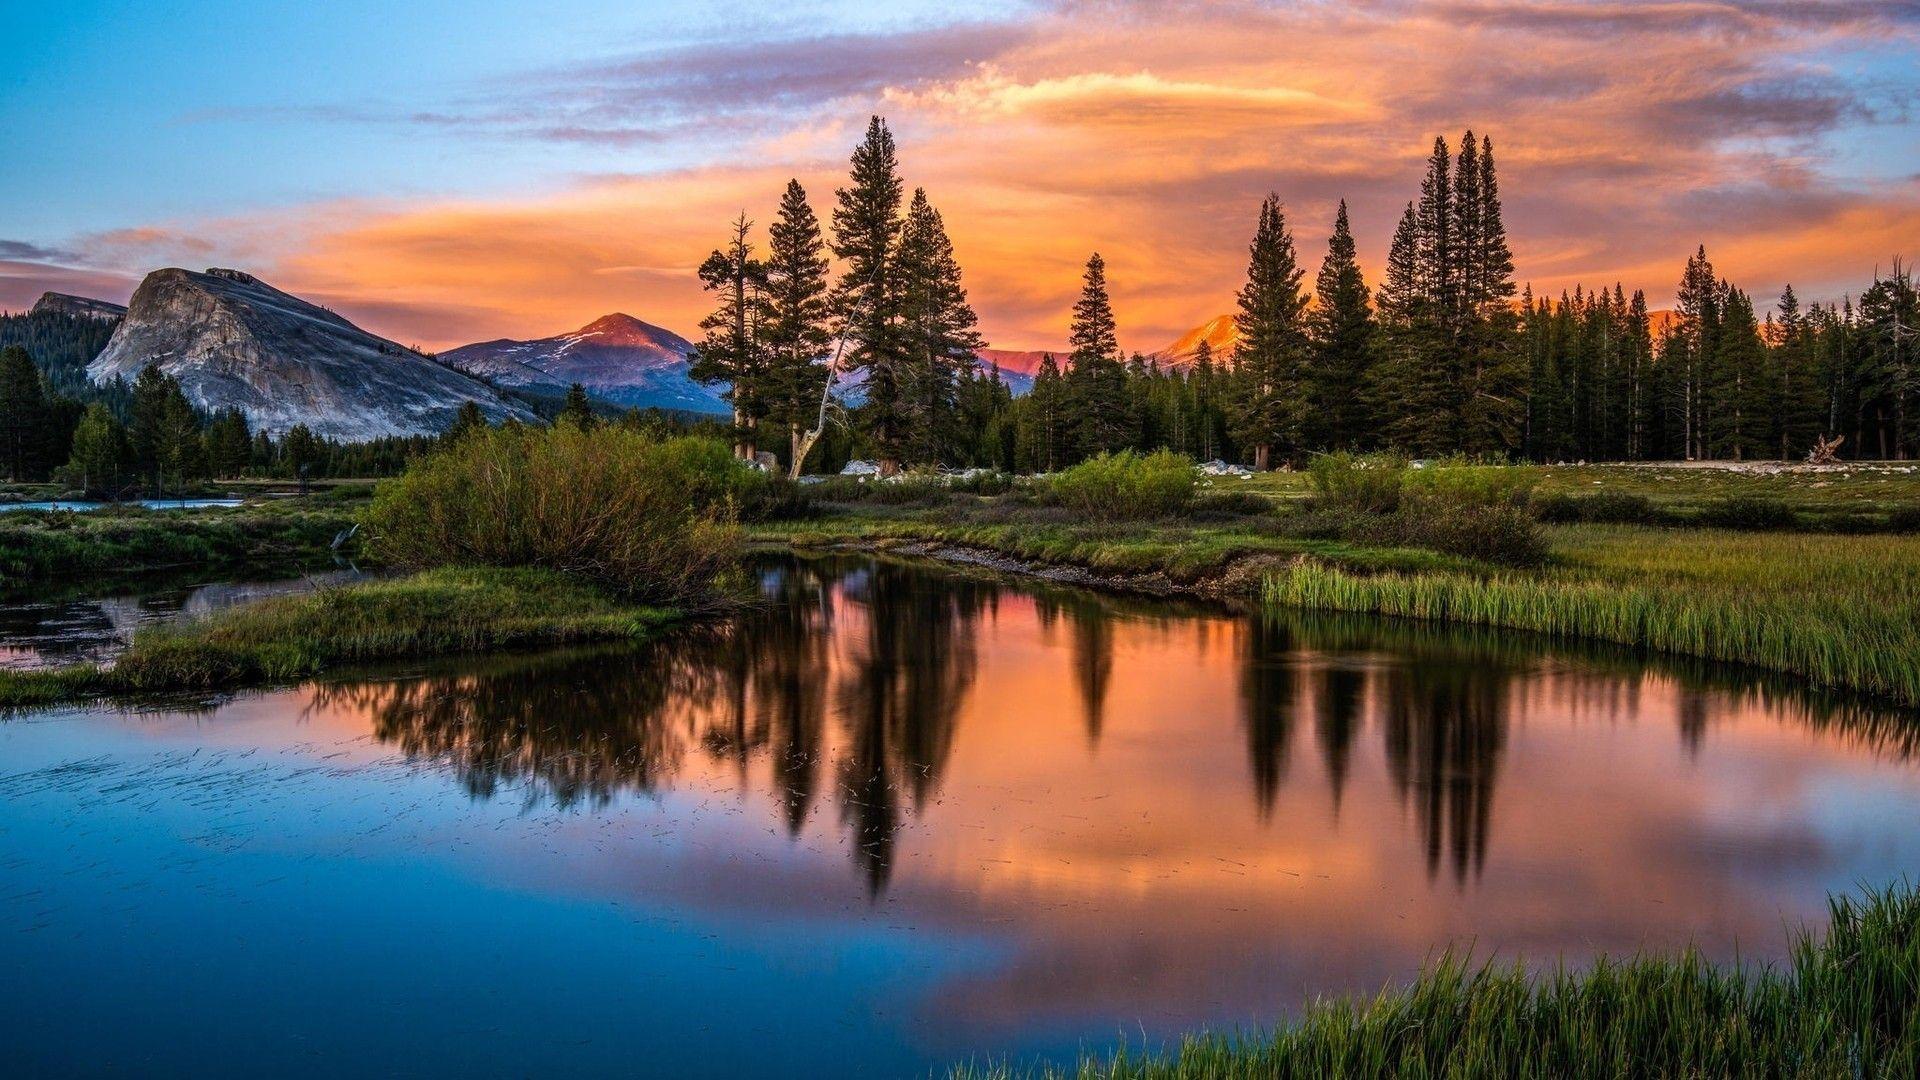 Sunset Lake Mountain Landscape Wallpaper at